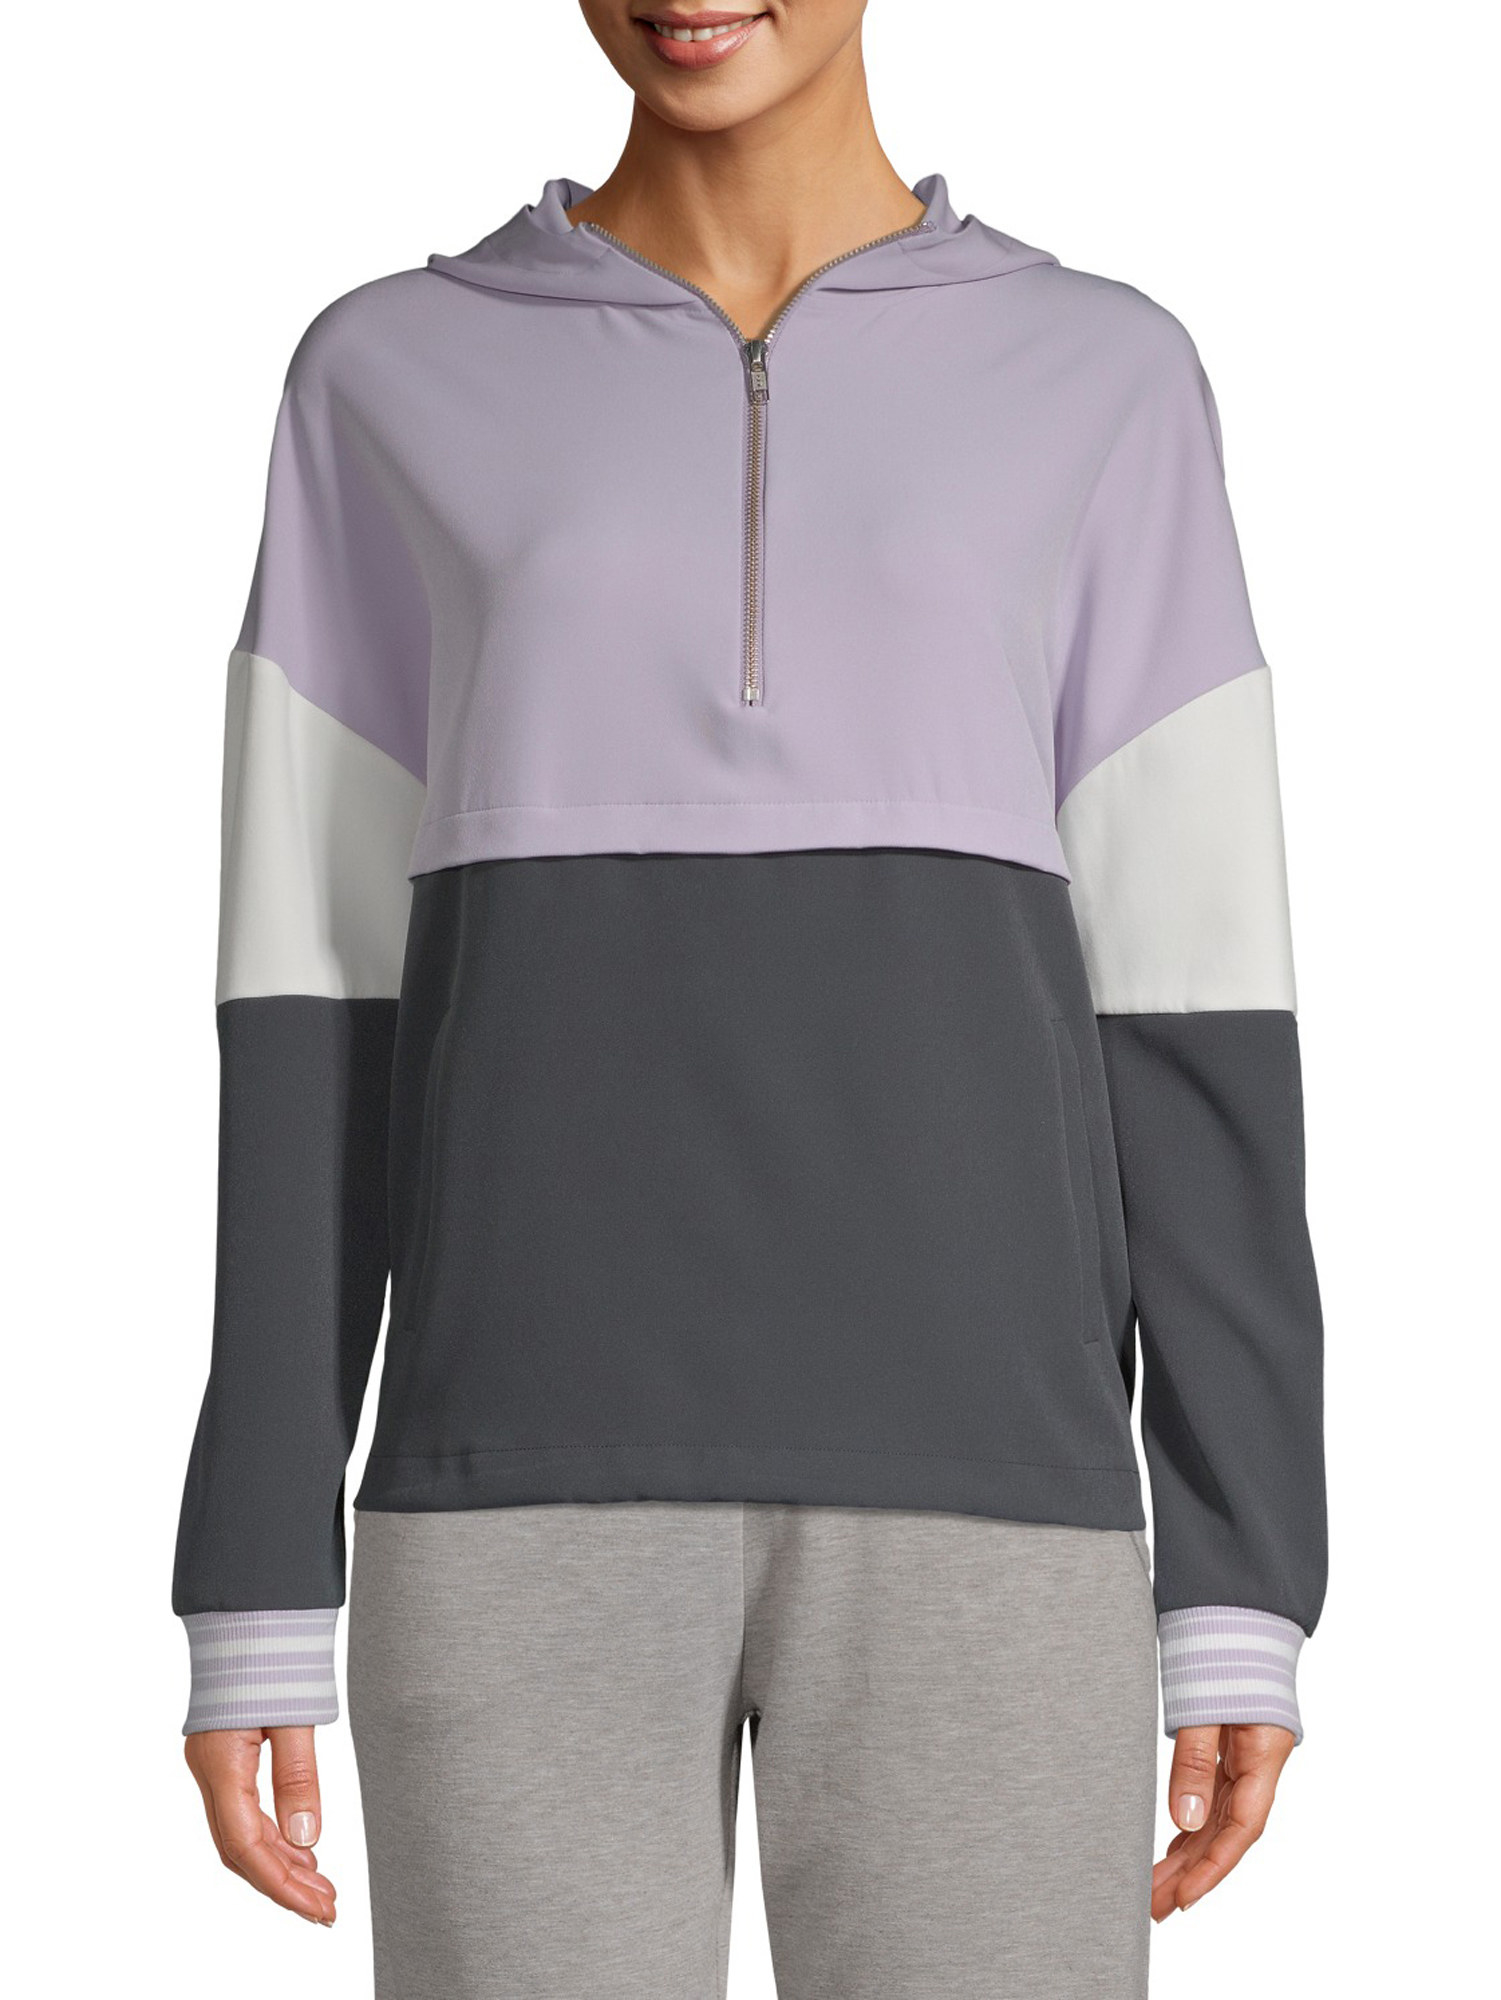 The lavender and grey colorblock sweatshirt